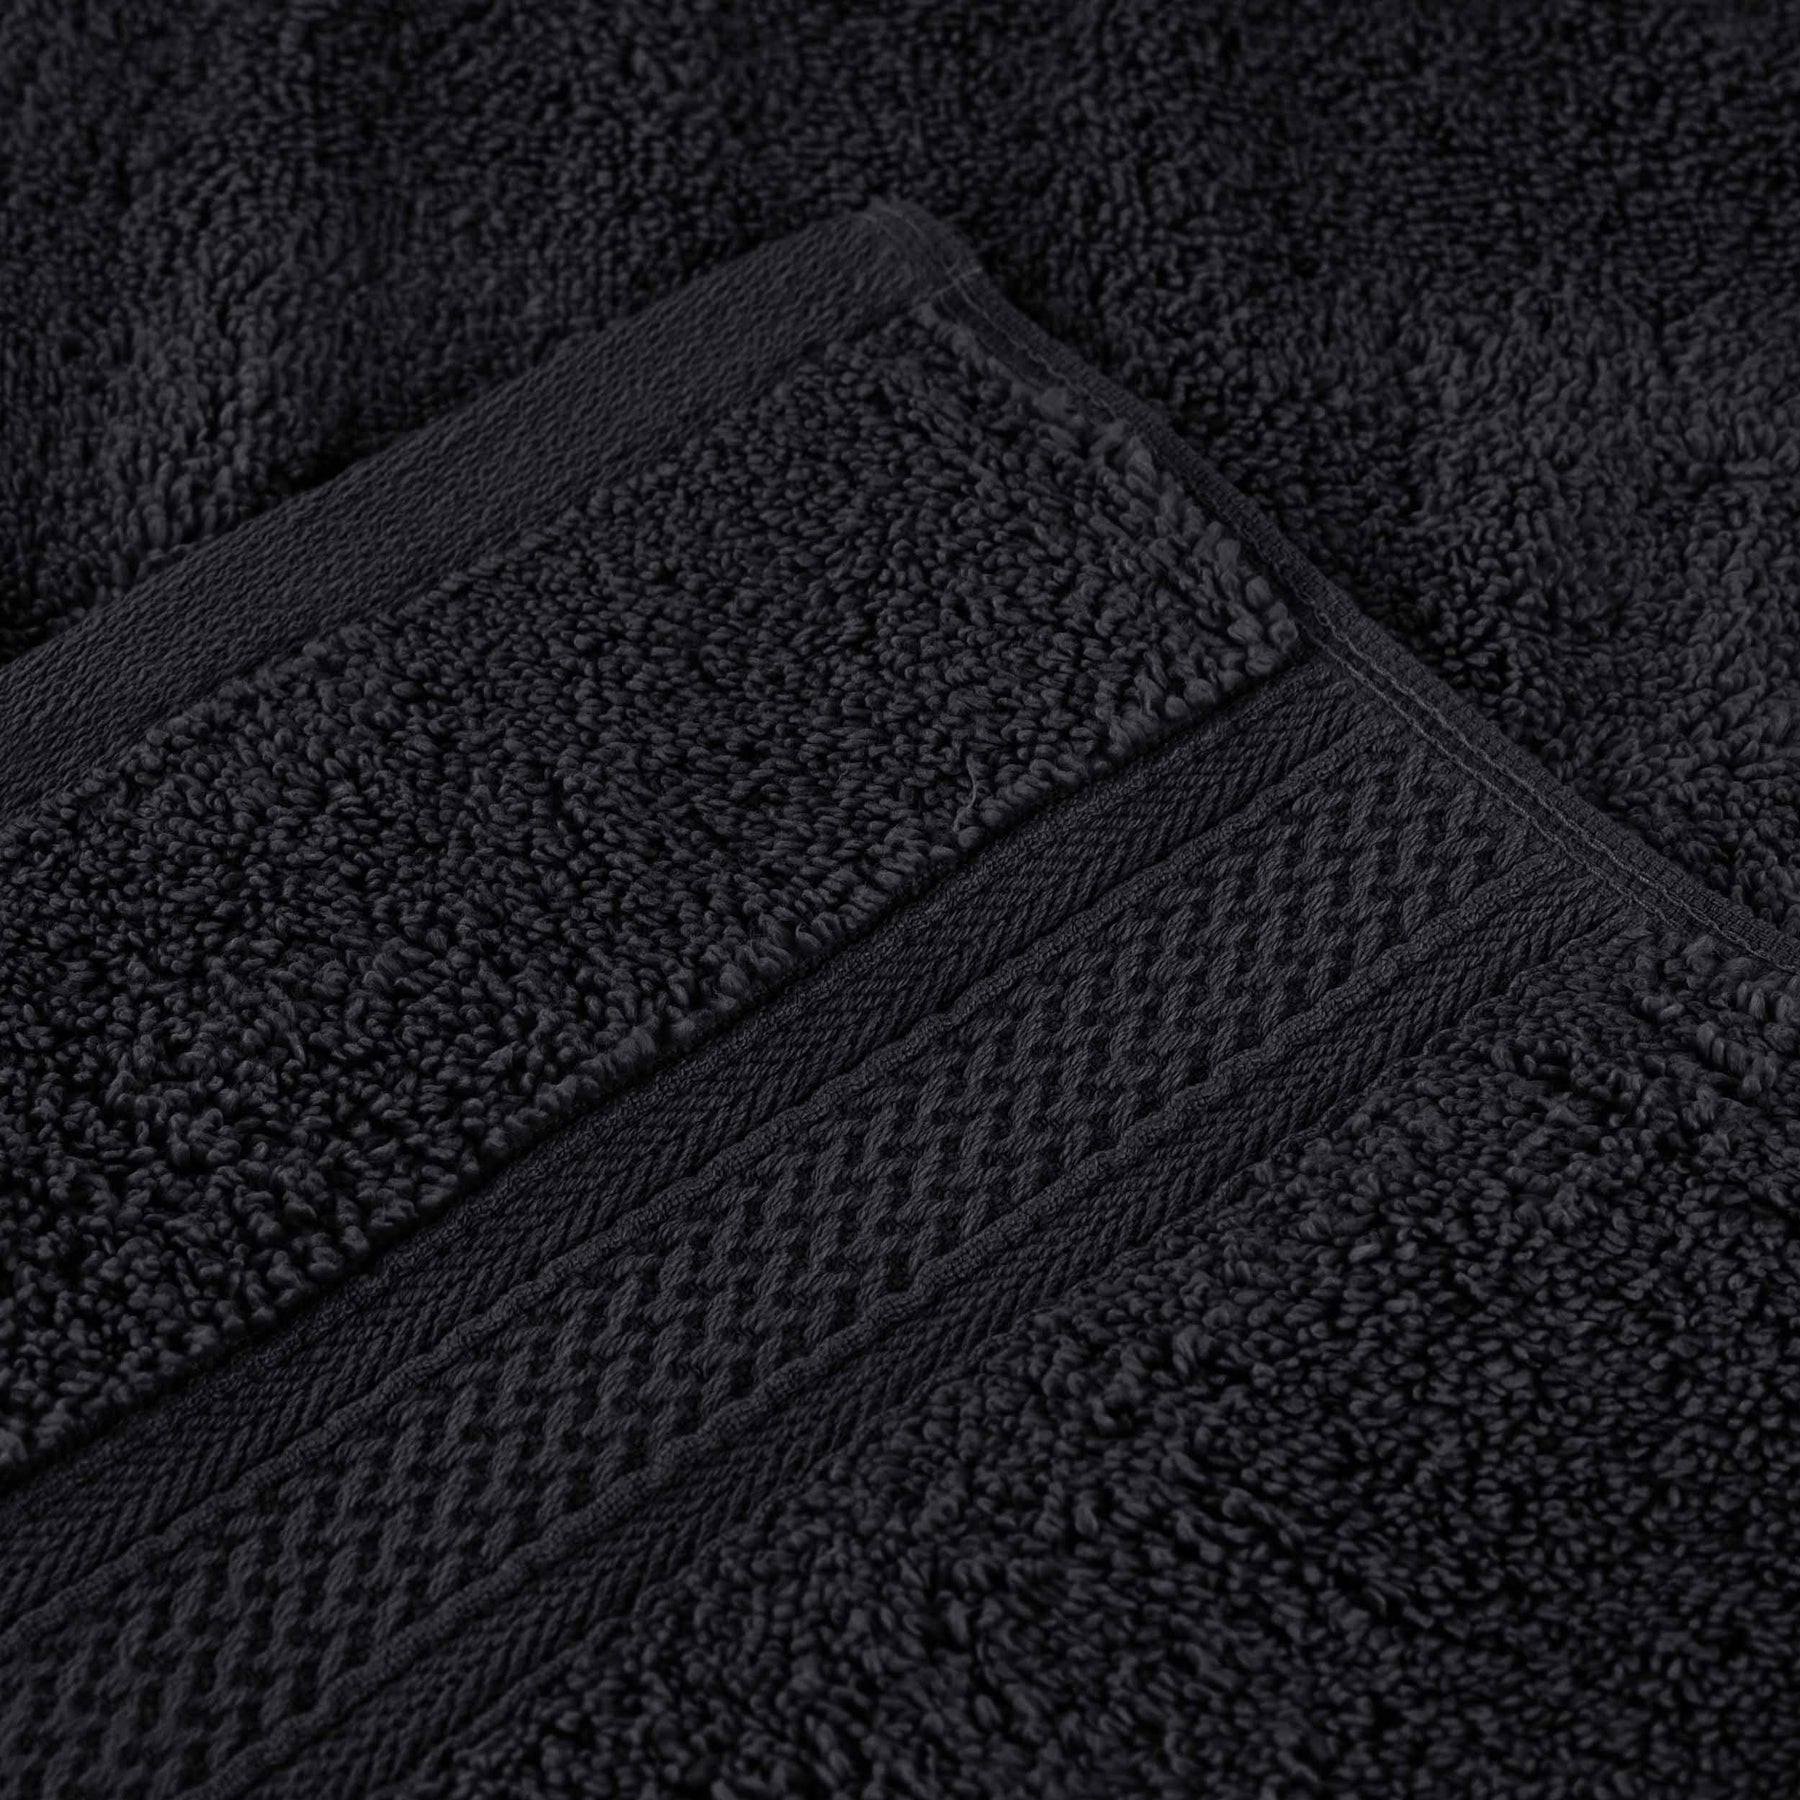 Chevron Zero Twist Cotton Solid and Jacquard Hand Towel - Black